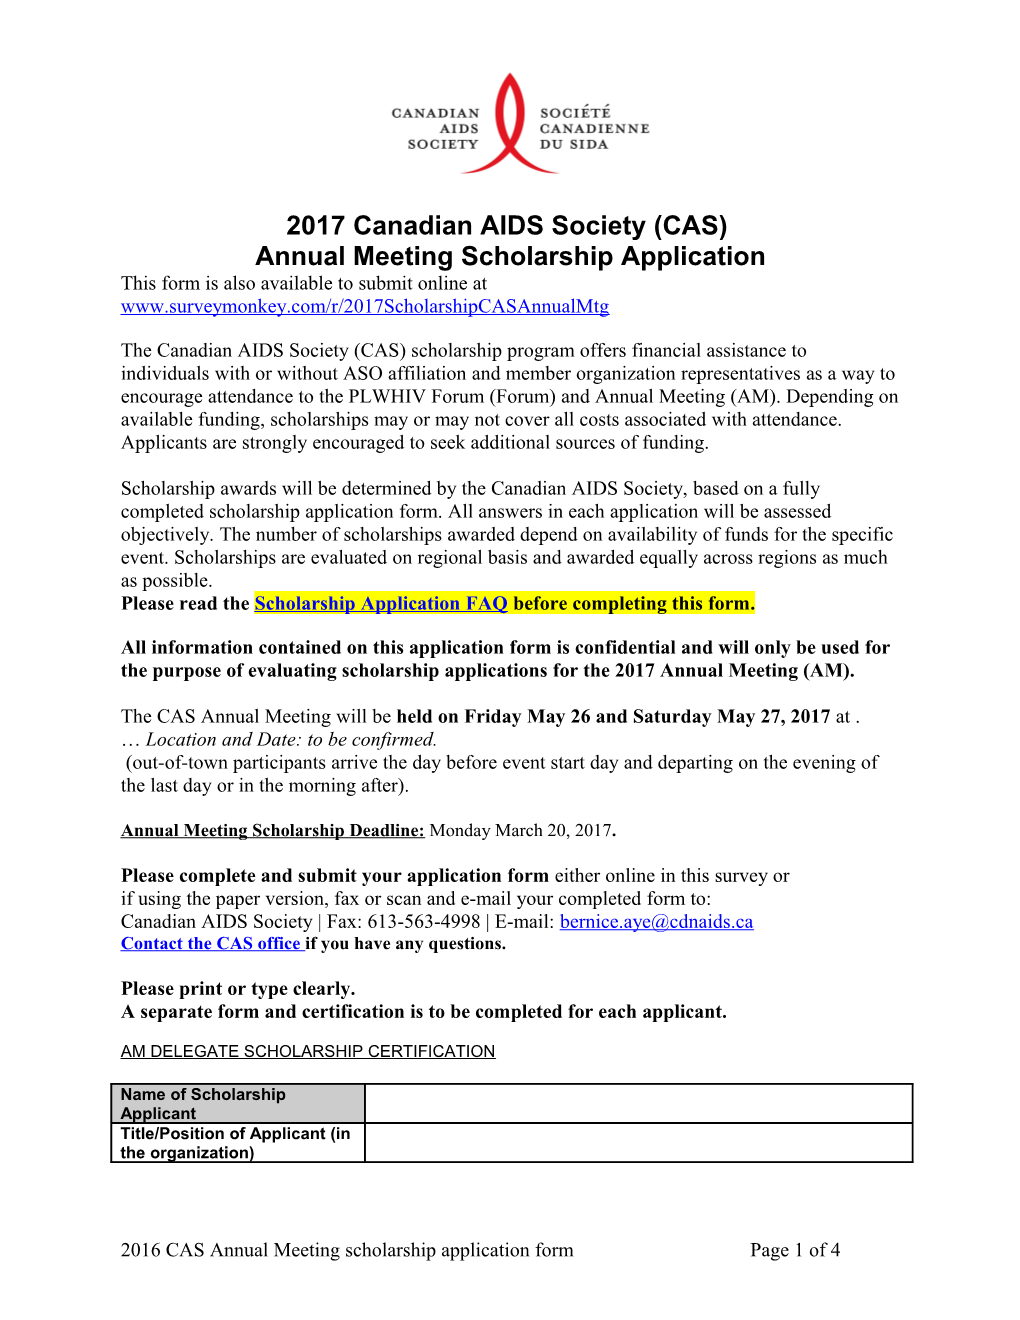 CAS AGM Scholarship Application Form